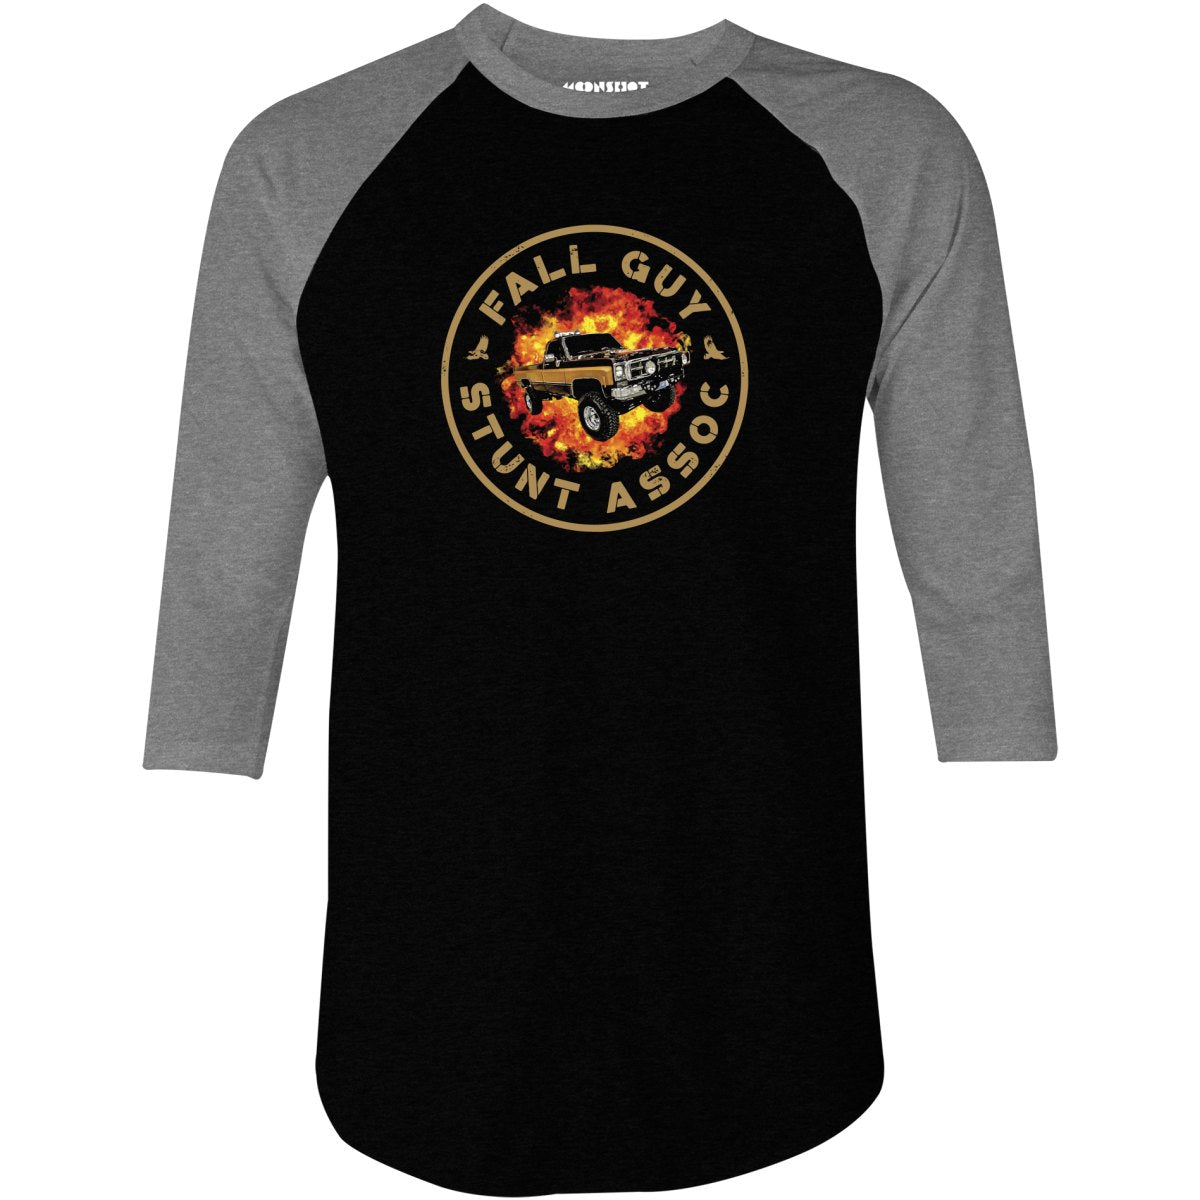 Fall Guy Stunt Association - 3/4 Sleeve Raglan T-Shirt